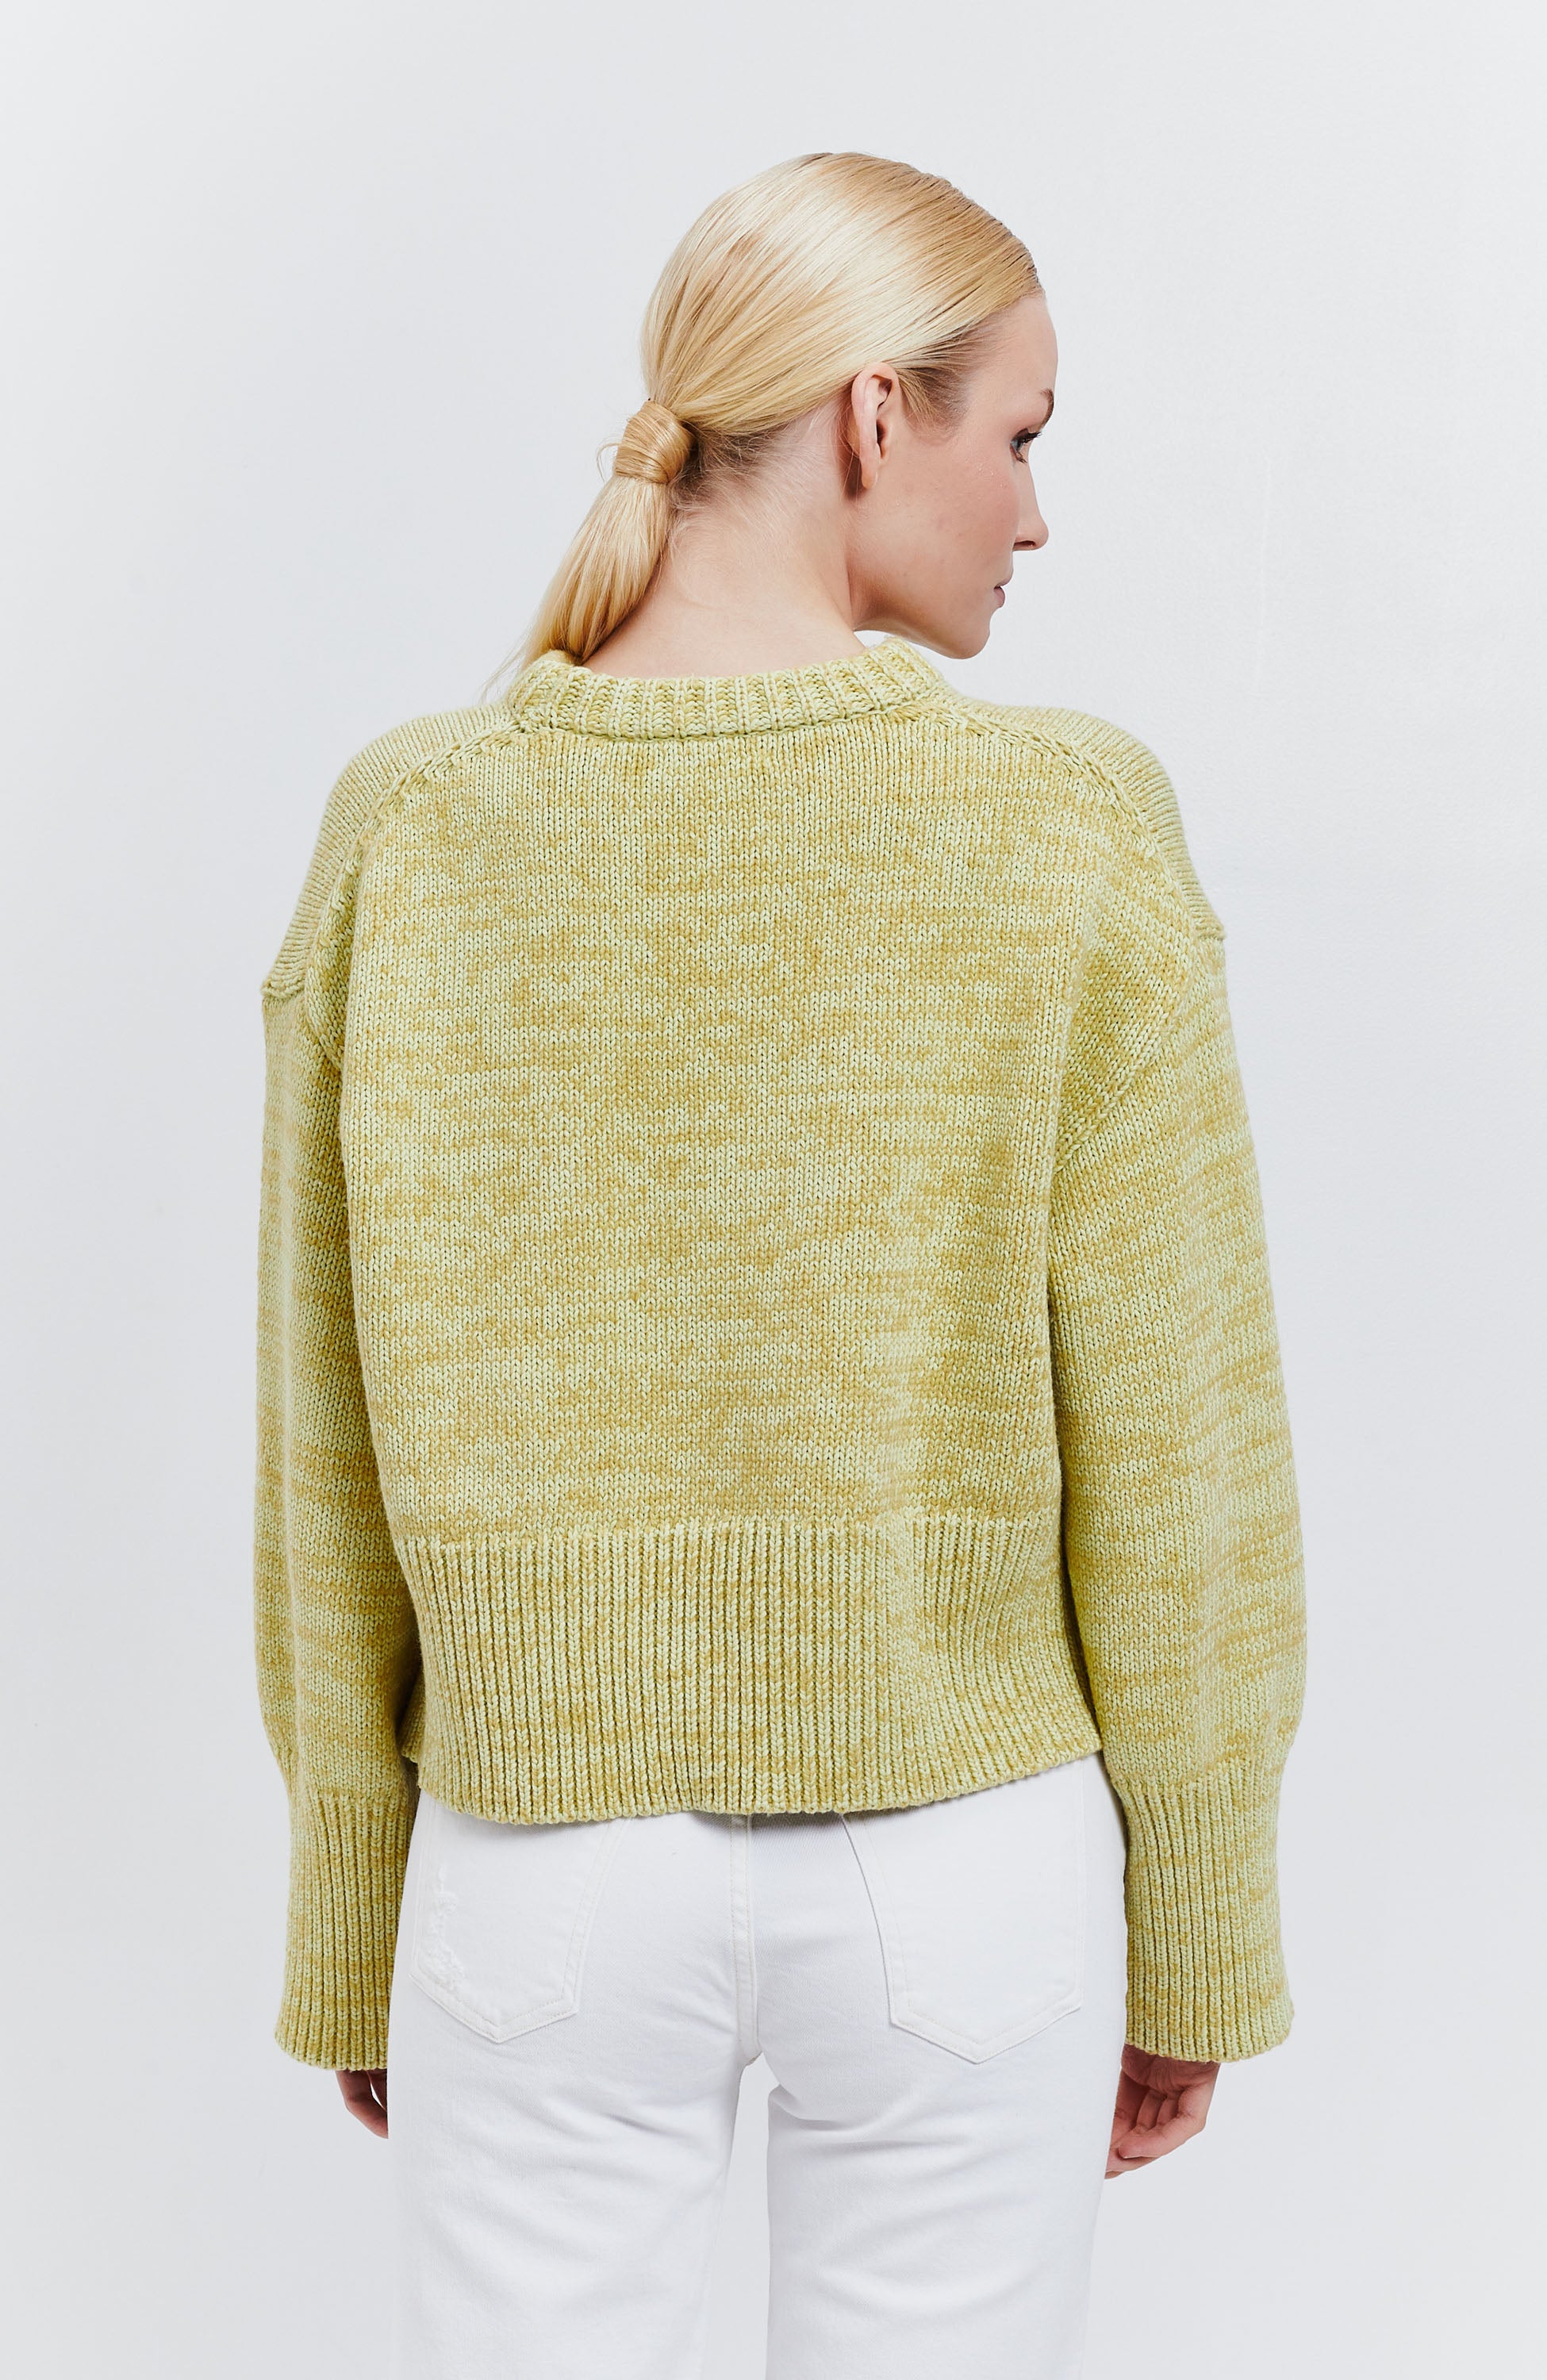 Mouline knit pullover